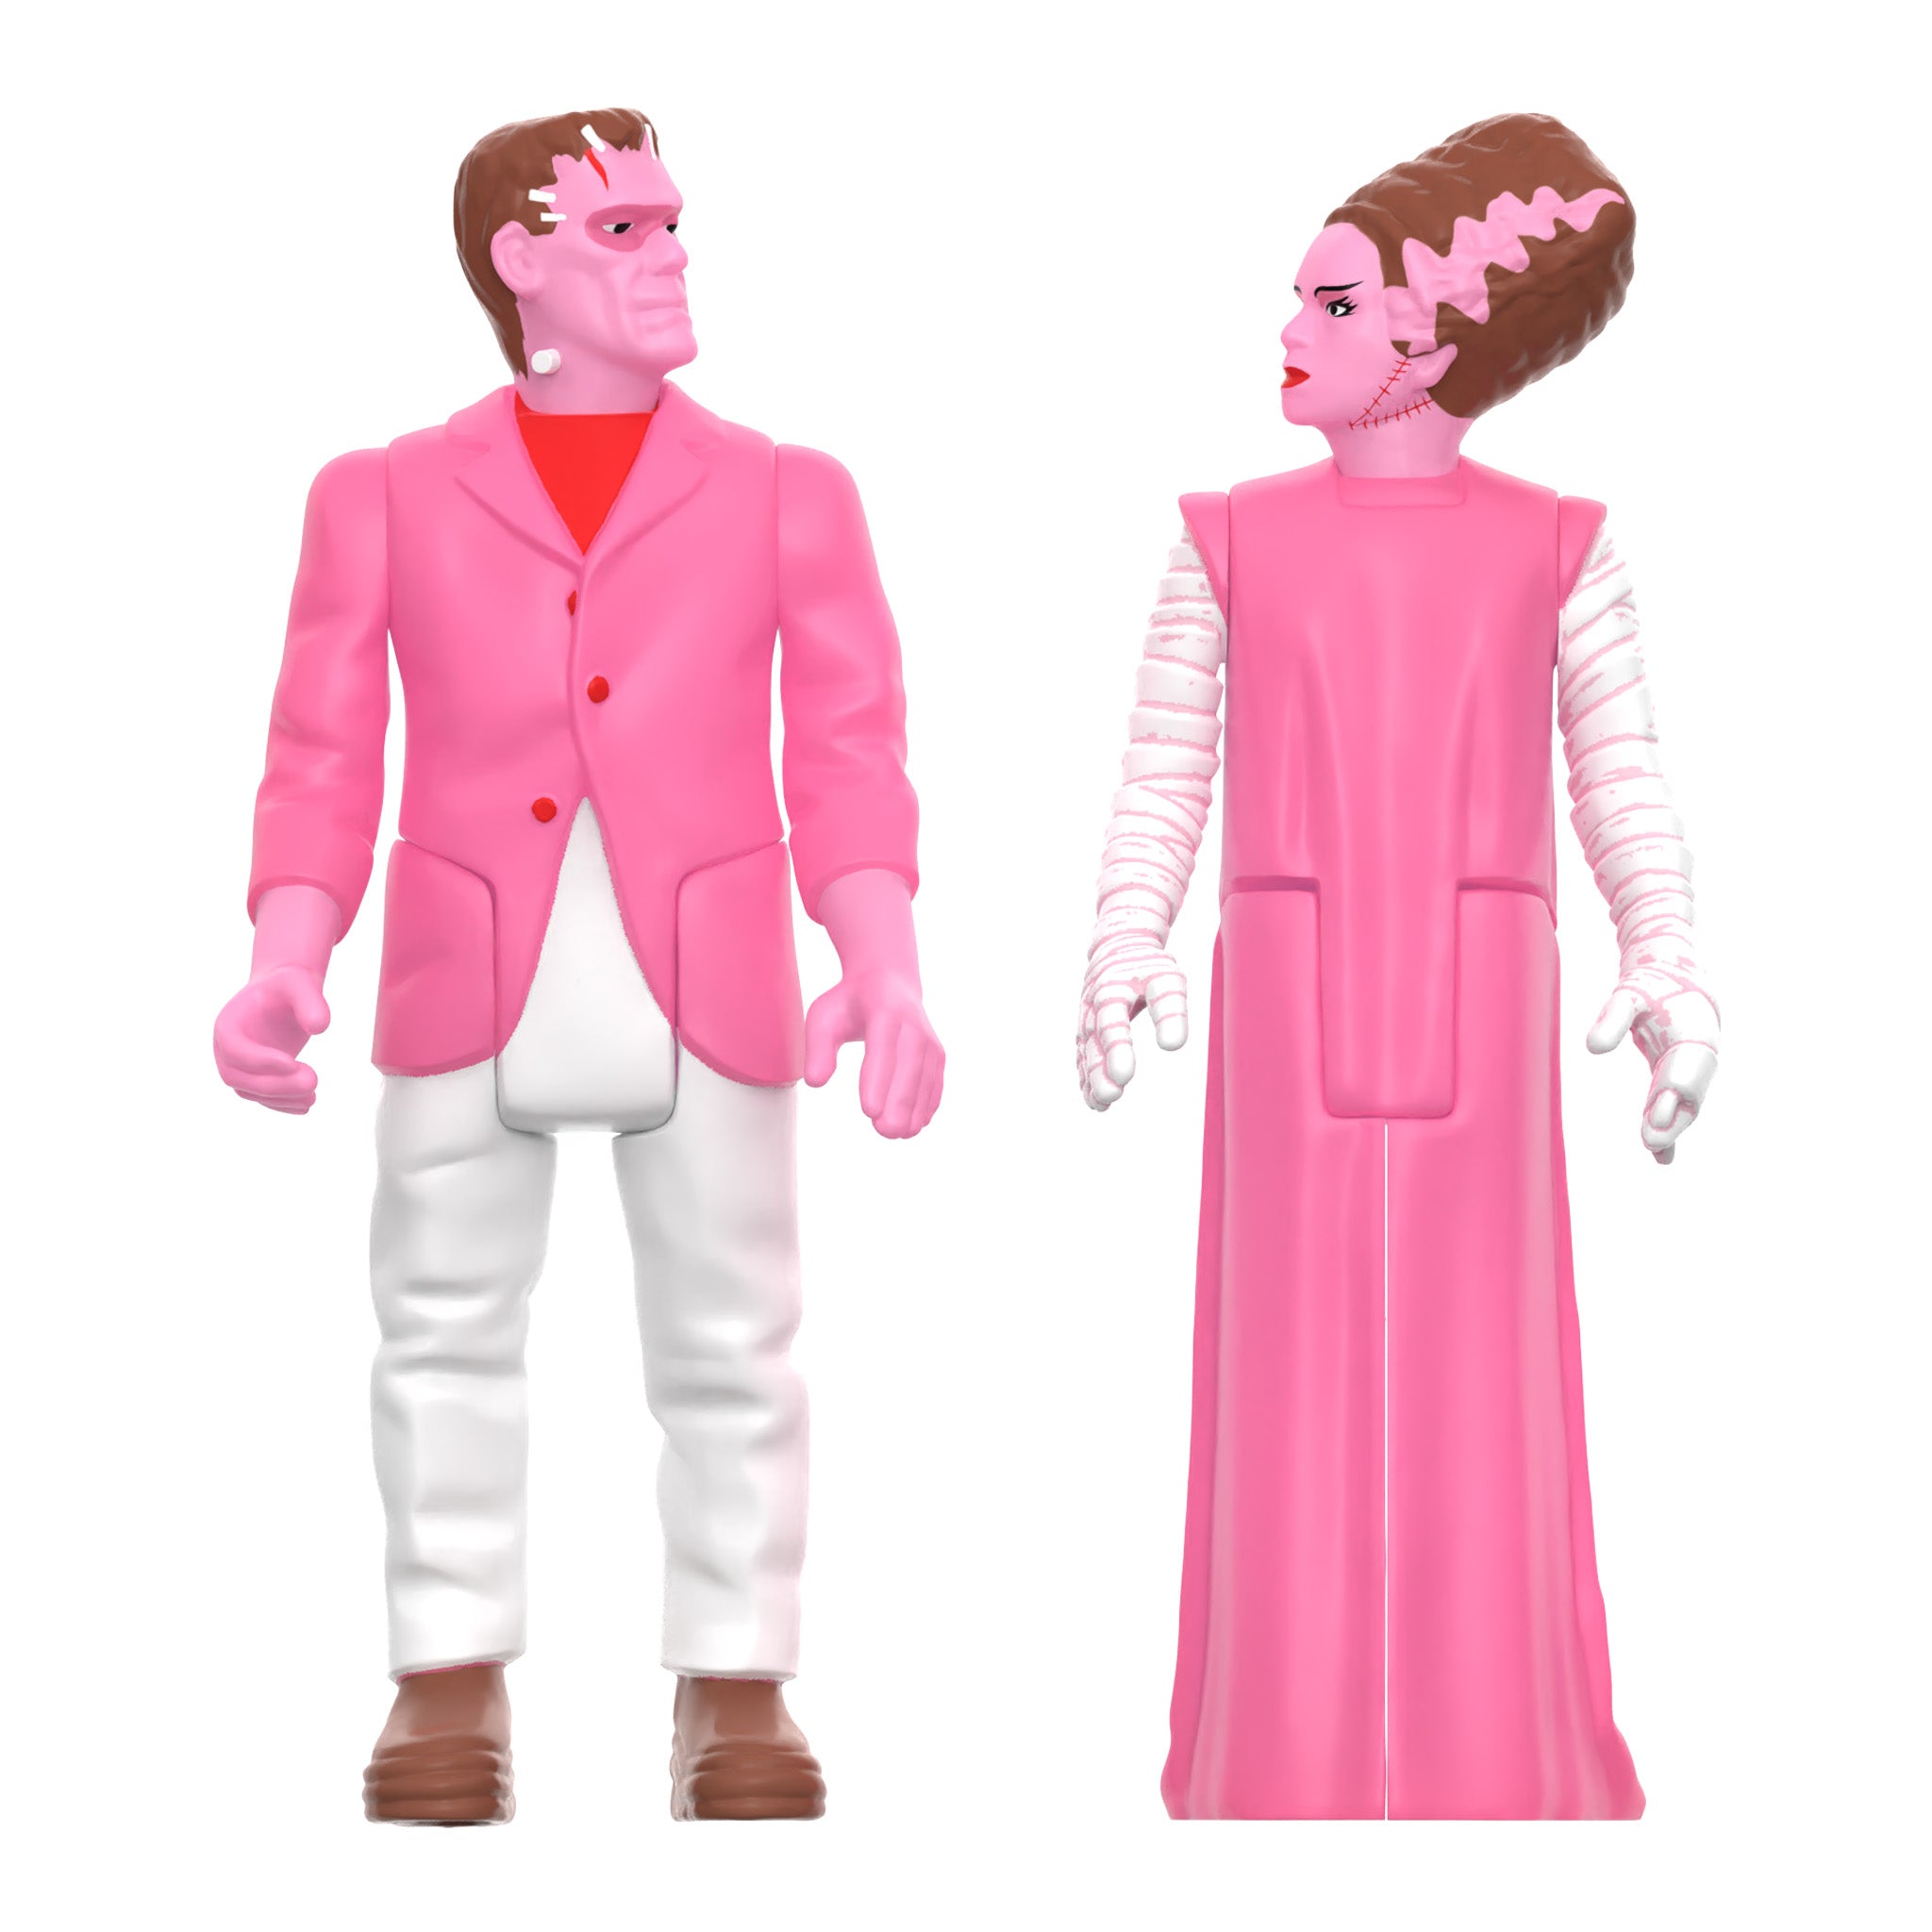 Universal Monsters ReAction Figures - Frankenstein and Bride of Frankenstein 2-Pack (Valentine's Day Heart Box)